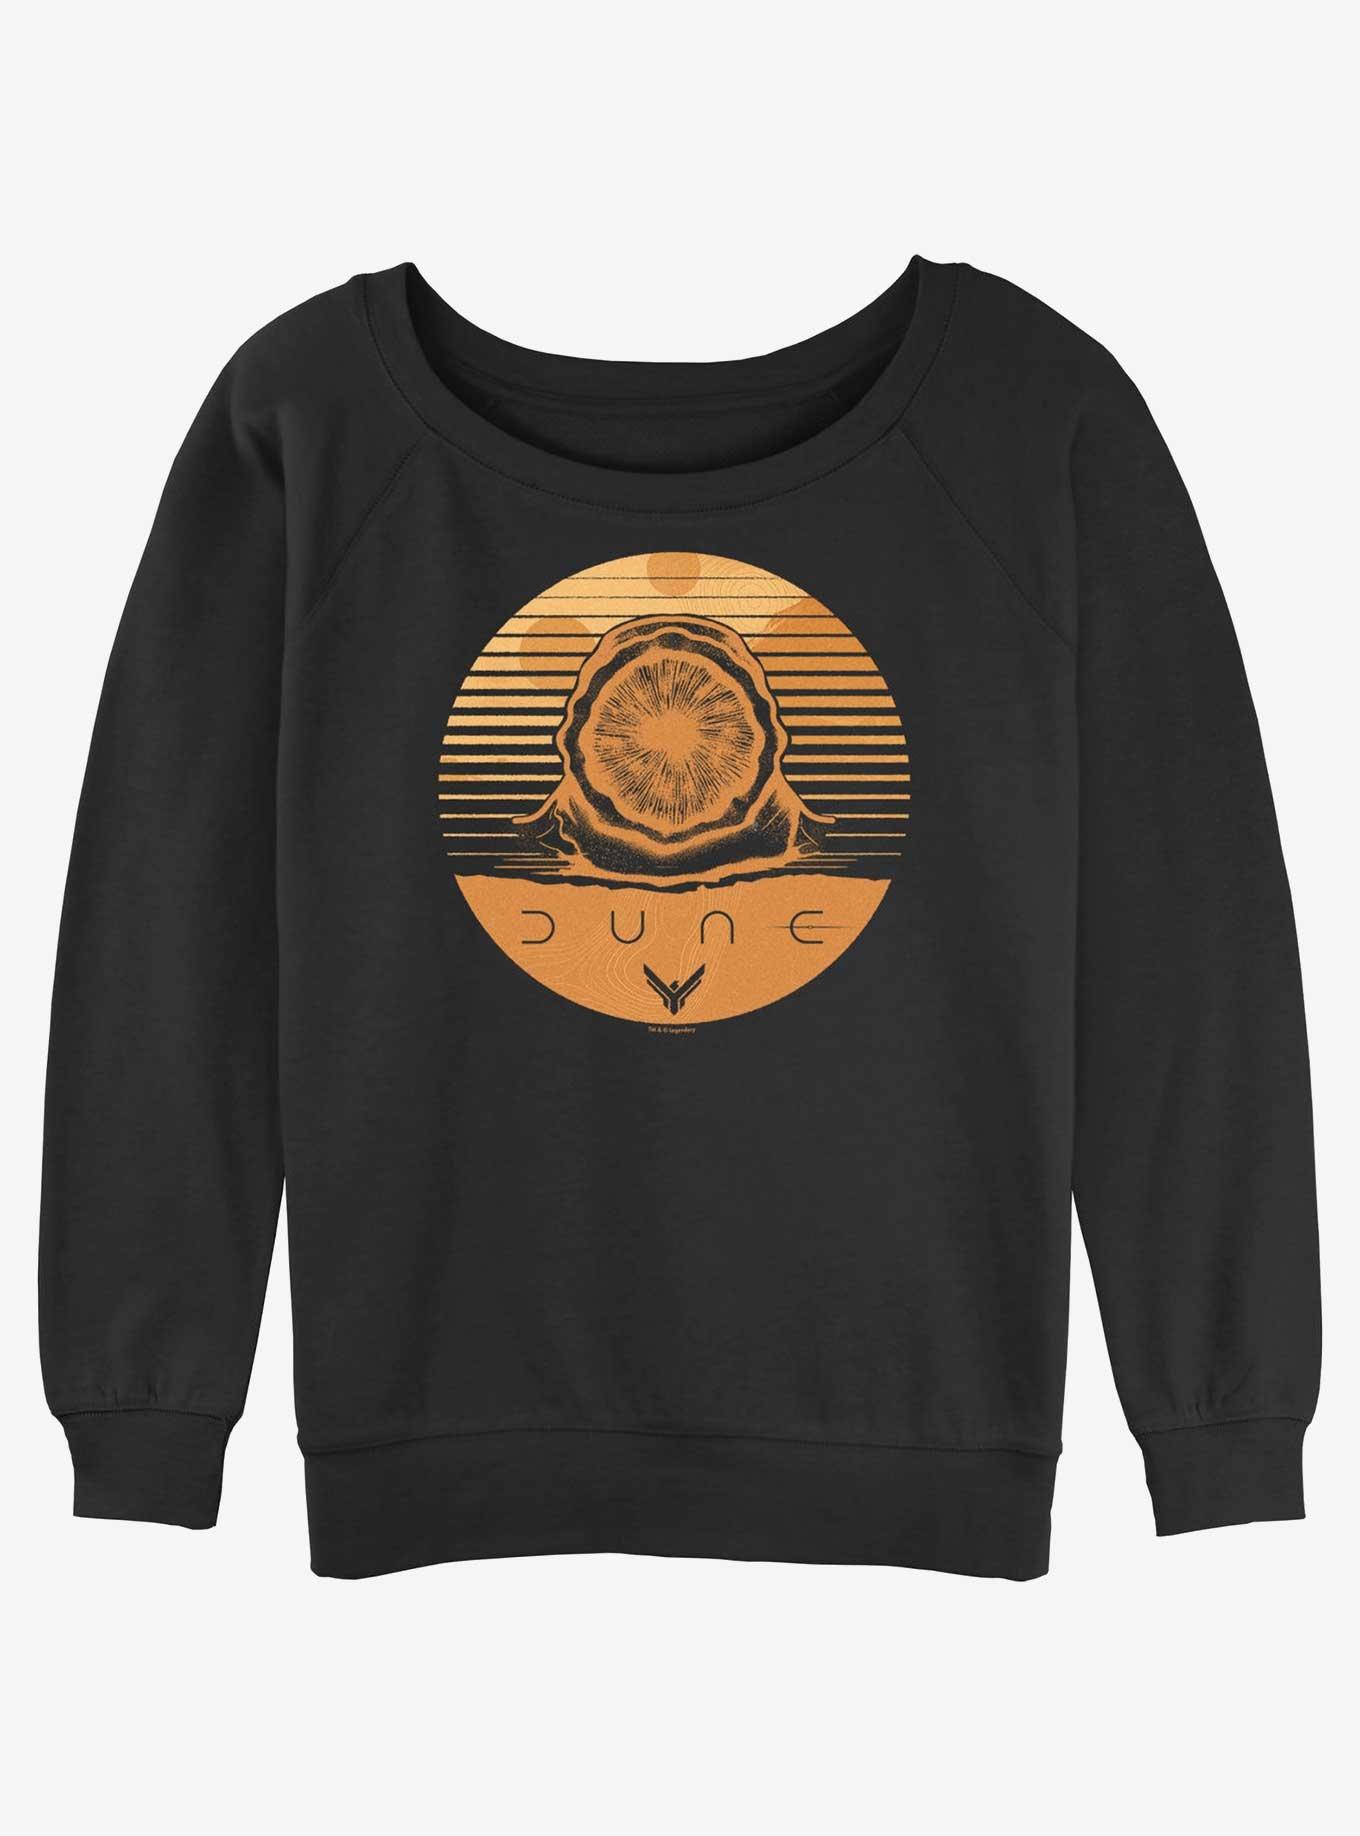 Dune: Part Two Arrakis Sandworm Stamp Girls Slouchy Sweatshirt, , hi-res